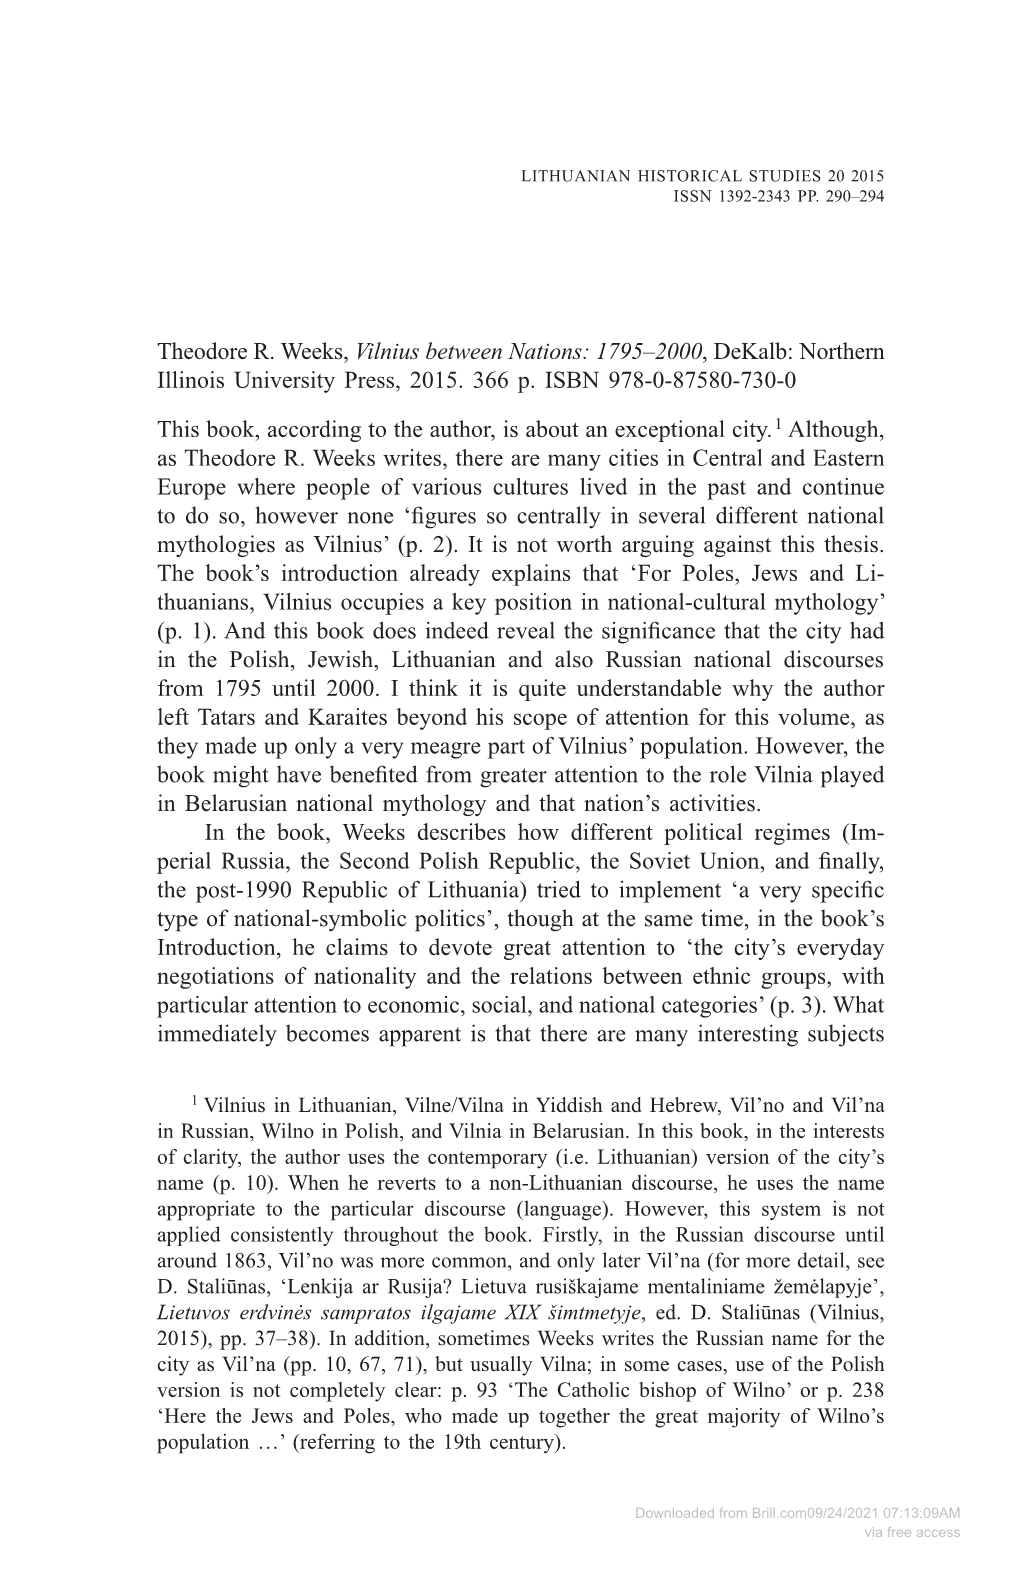 Theodore R. Weeks, Vilnius Between Nations: 1795–2000, Dekalb: Northern Illinois University Press, 2015